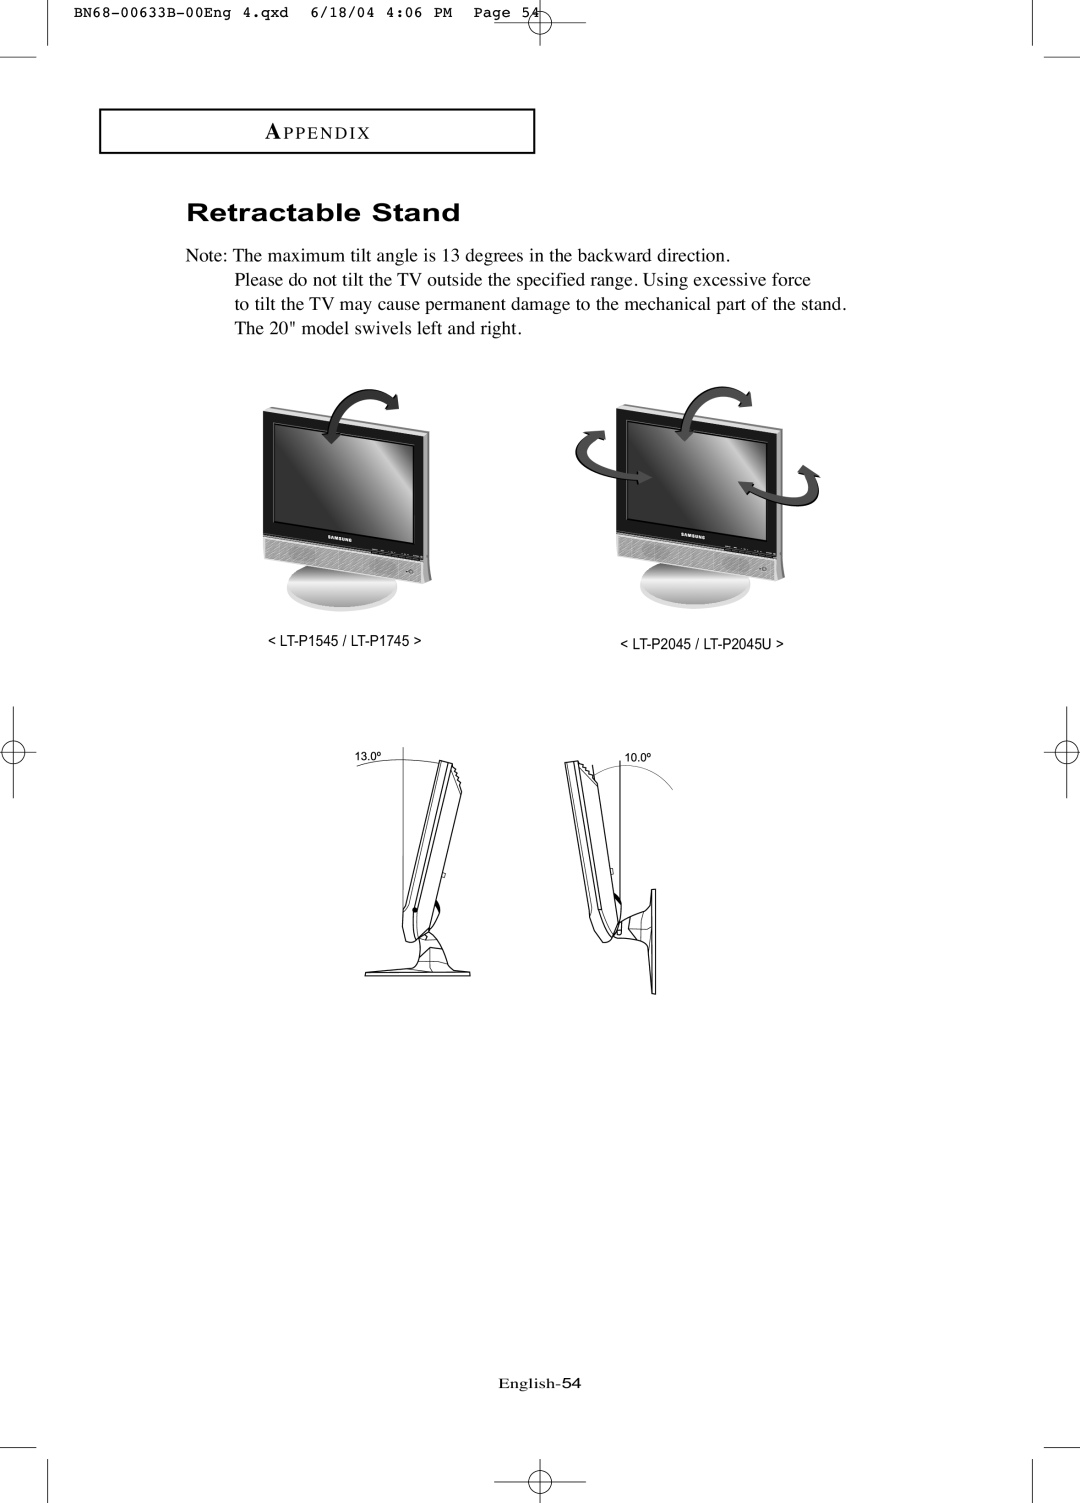 Samsung LT-P1545 manual Retractable Stand 